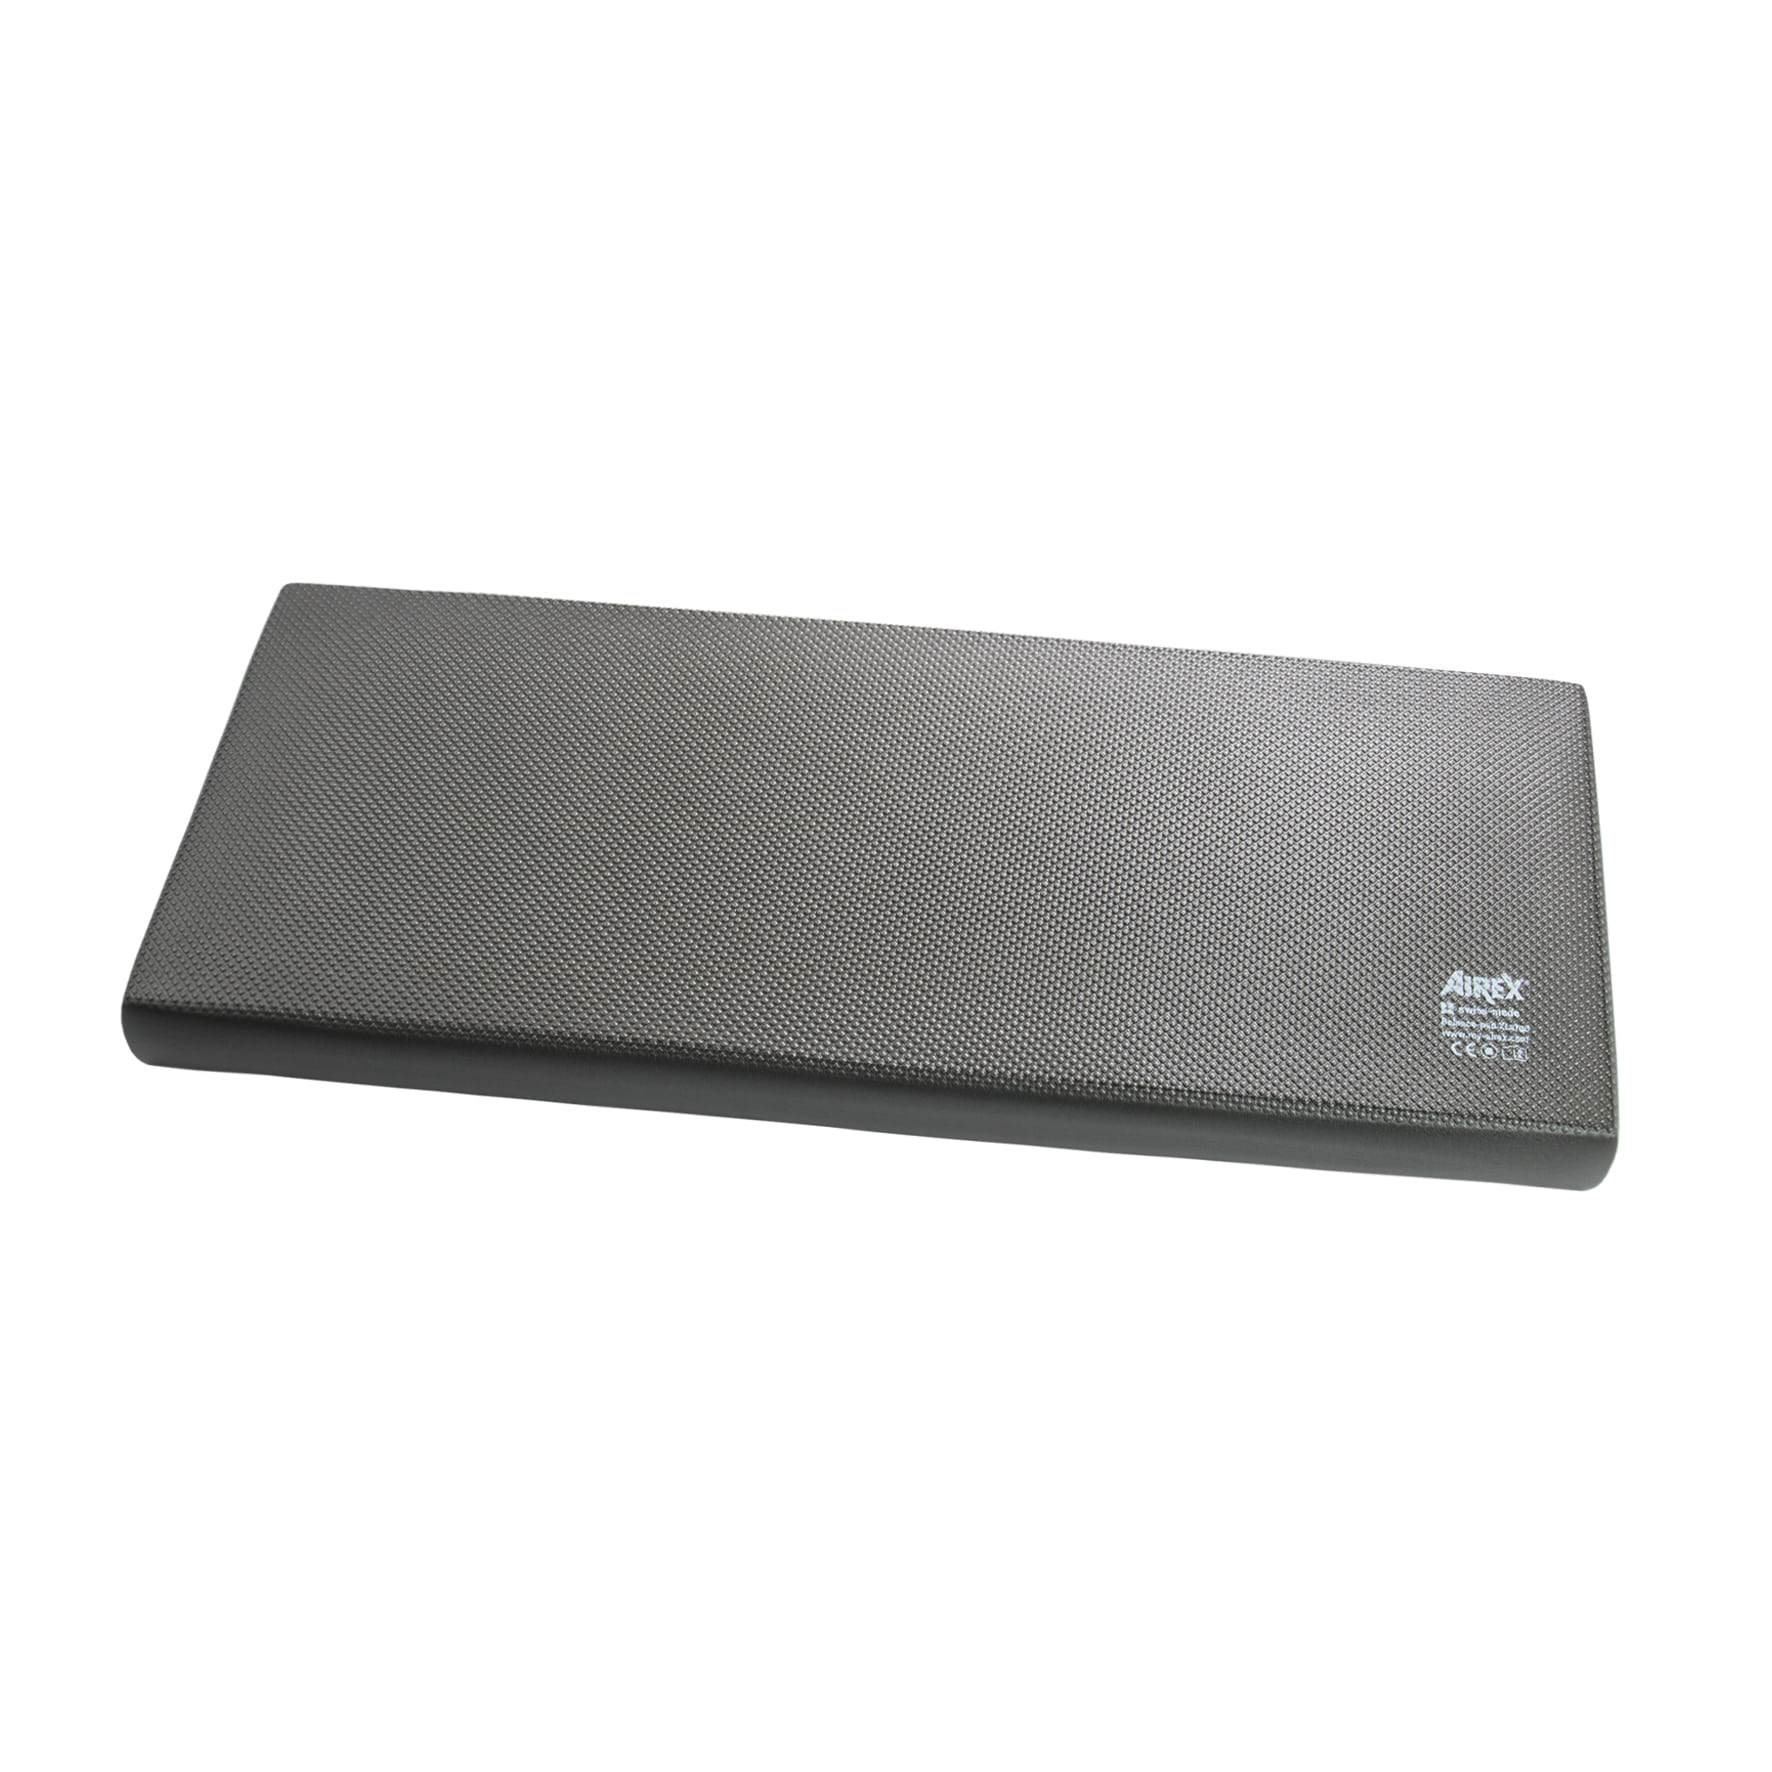 Airex® Balance Pad Elite Lava XL(대형)